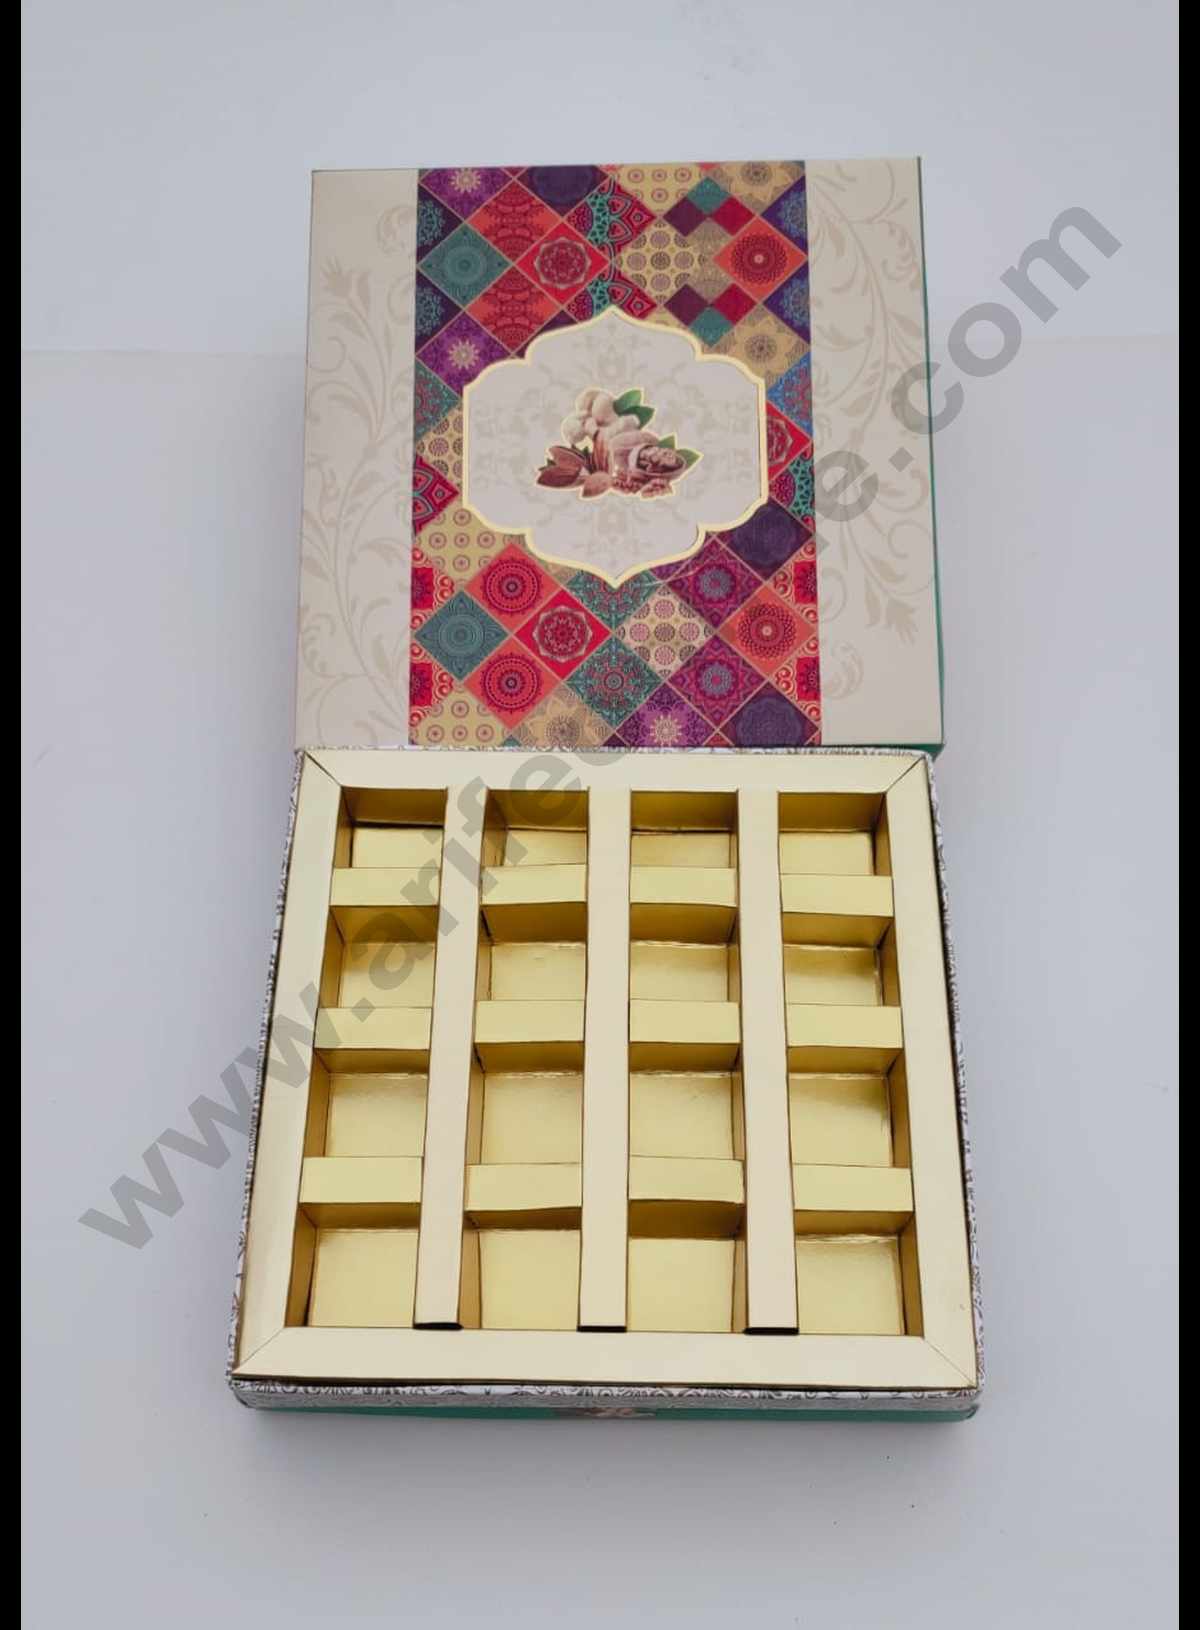 Diwali Sweets - Malai Diwali Ice Cream Celebration Box | The Kitchn